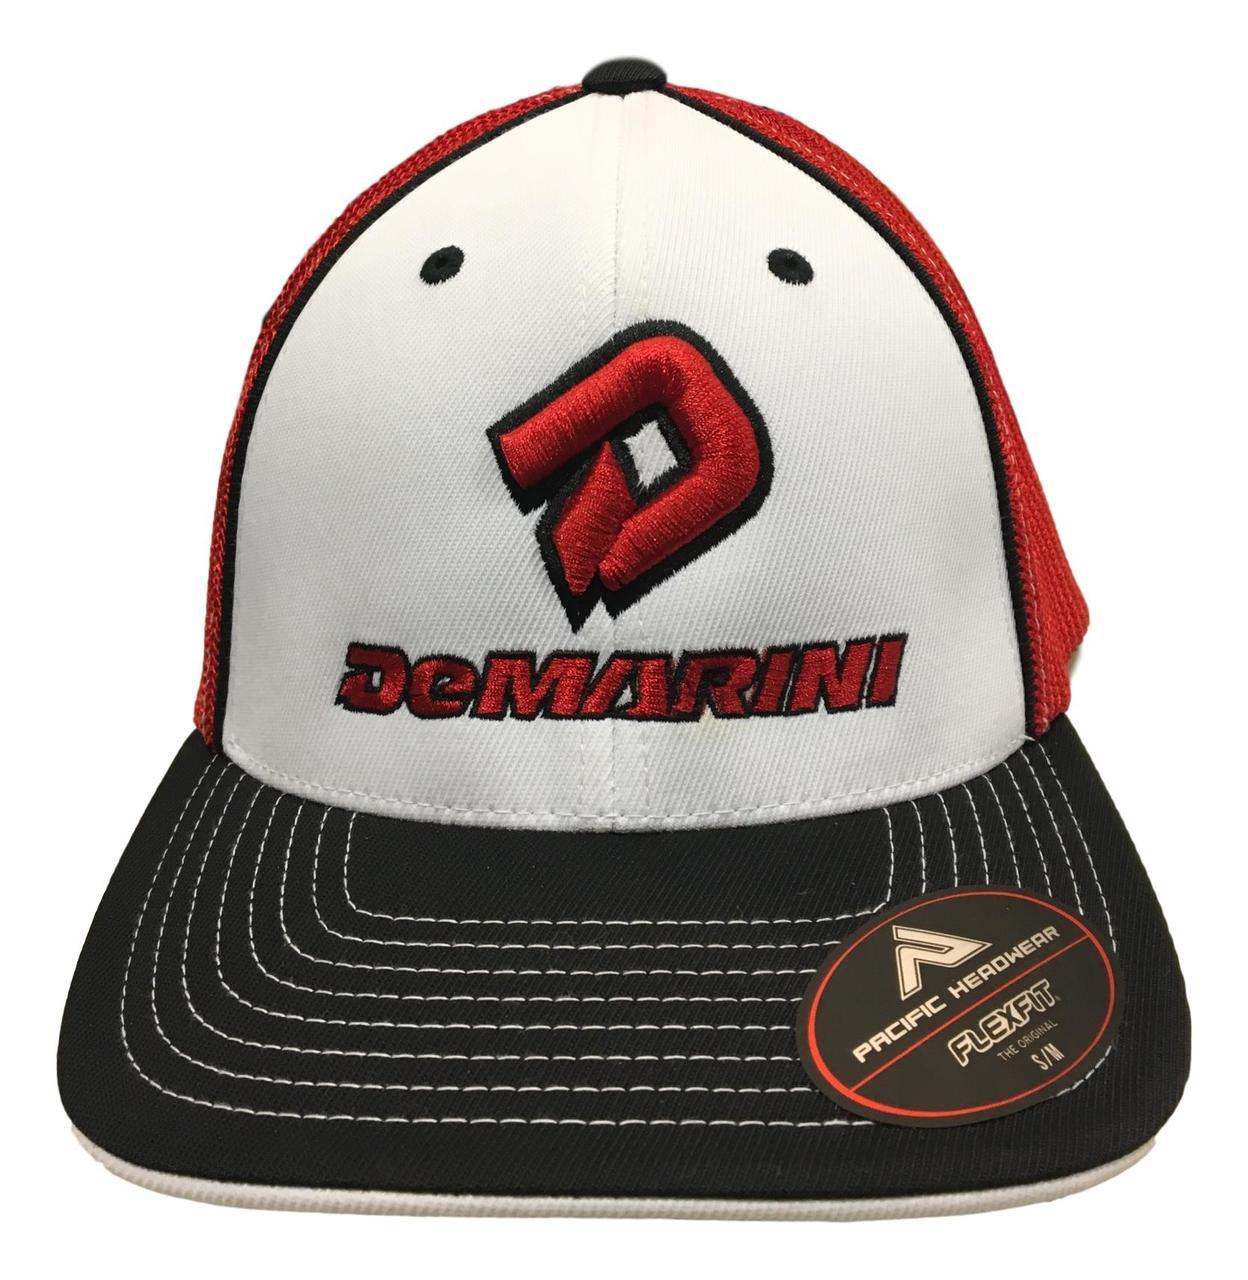 DeMarini Logo - DEMARINI LOGO HAT - DBLKRDWHT-RDBLK - All American Athletics